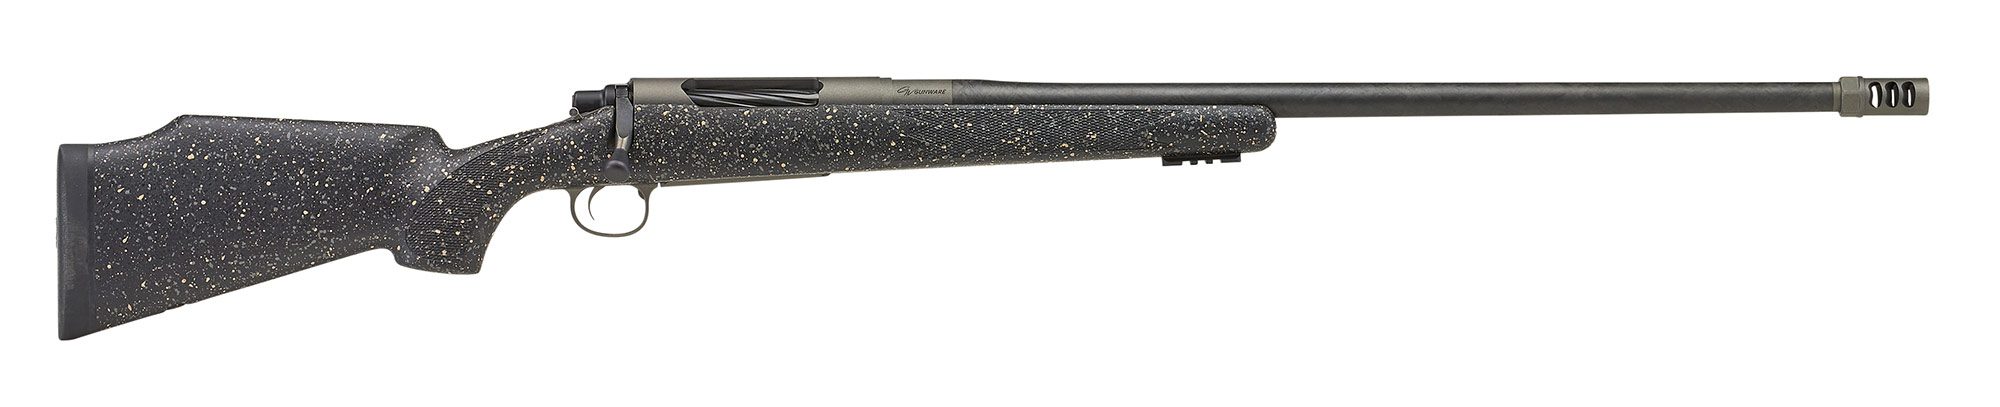 7 Rem Mag Rifle